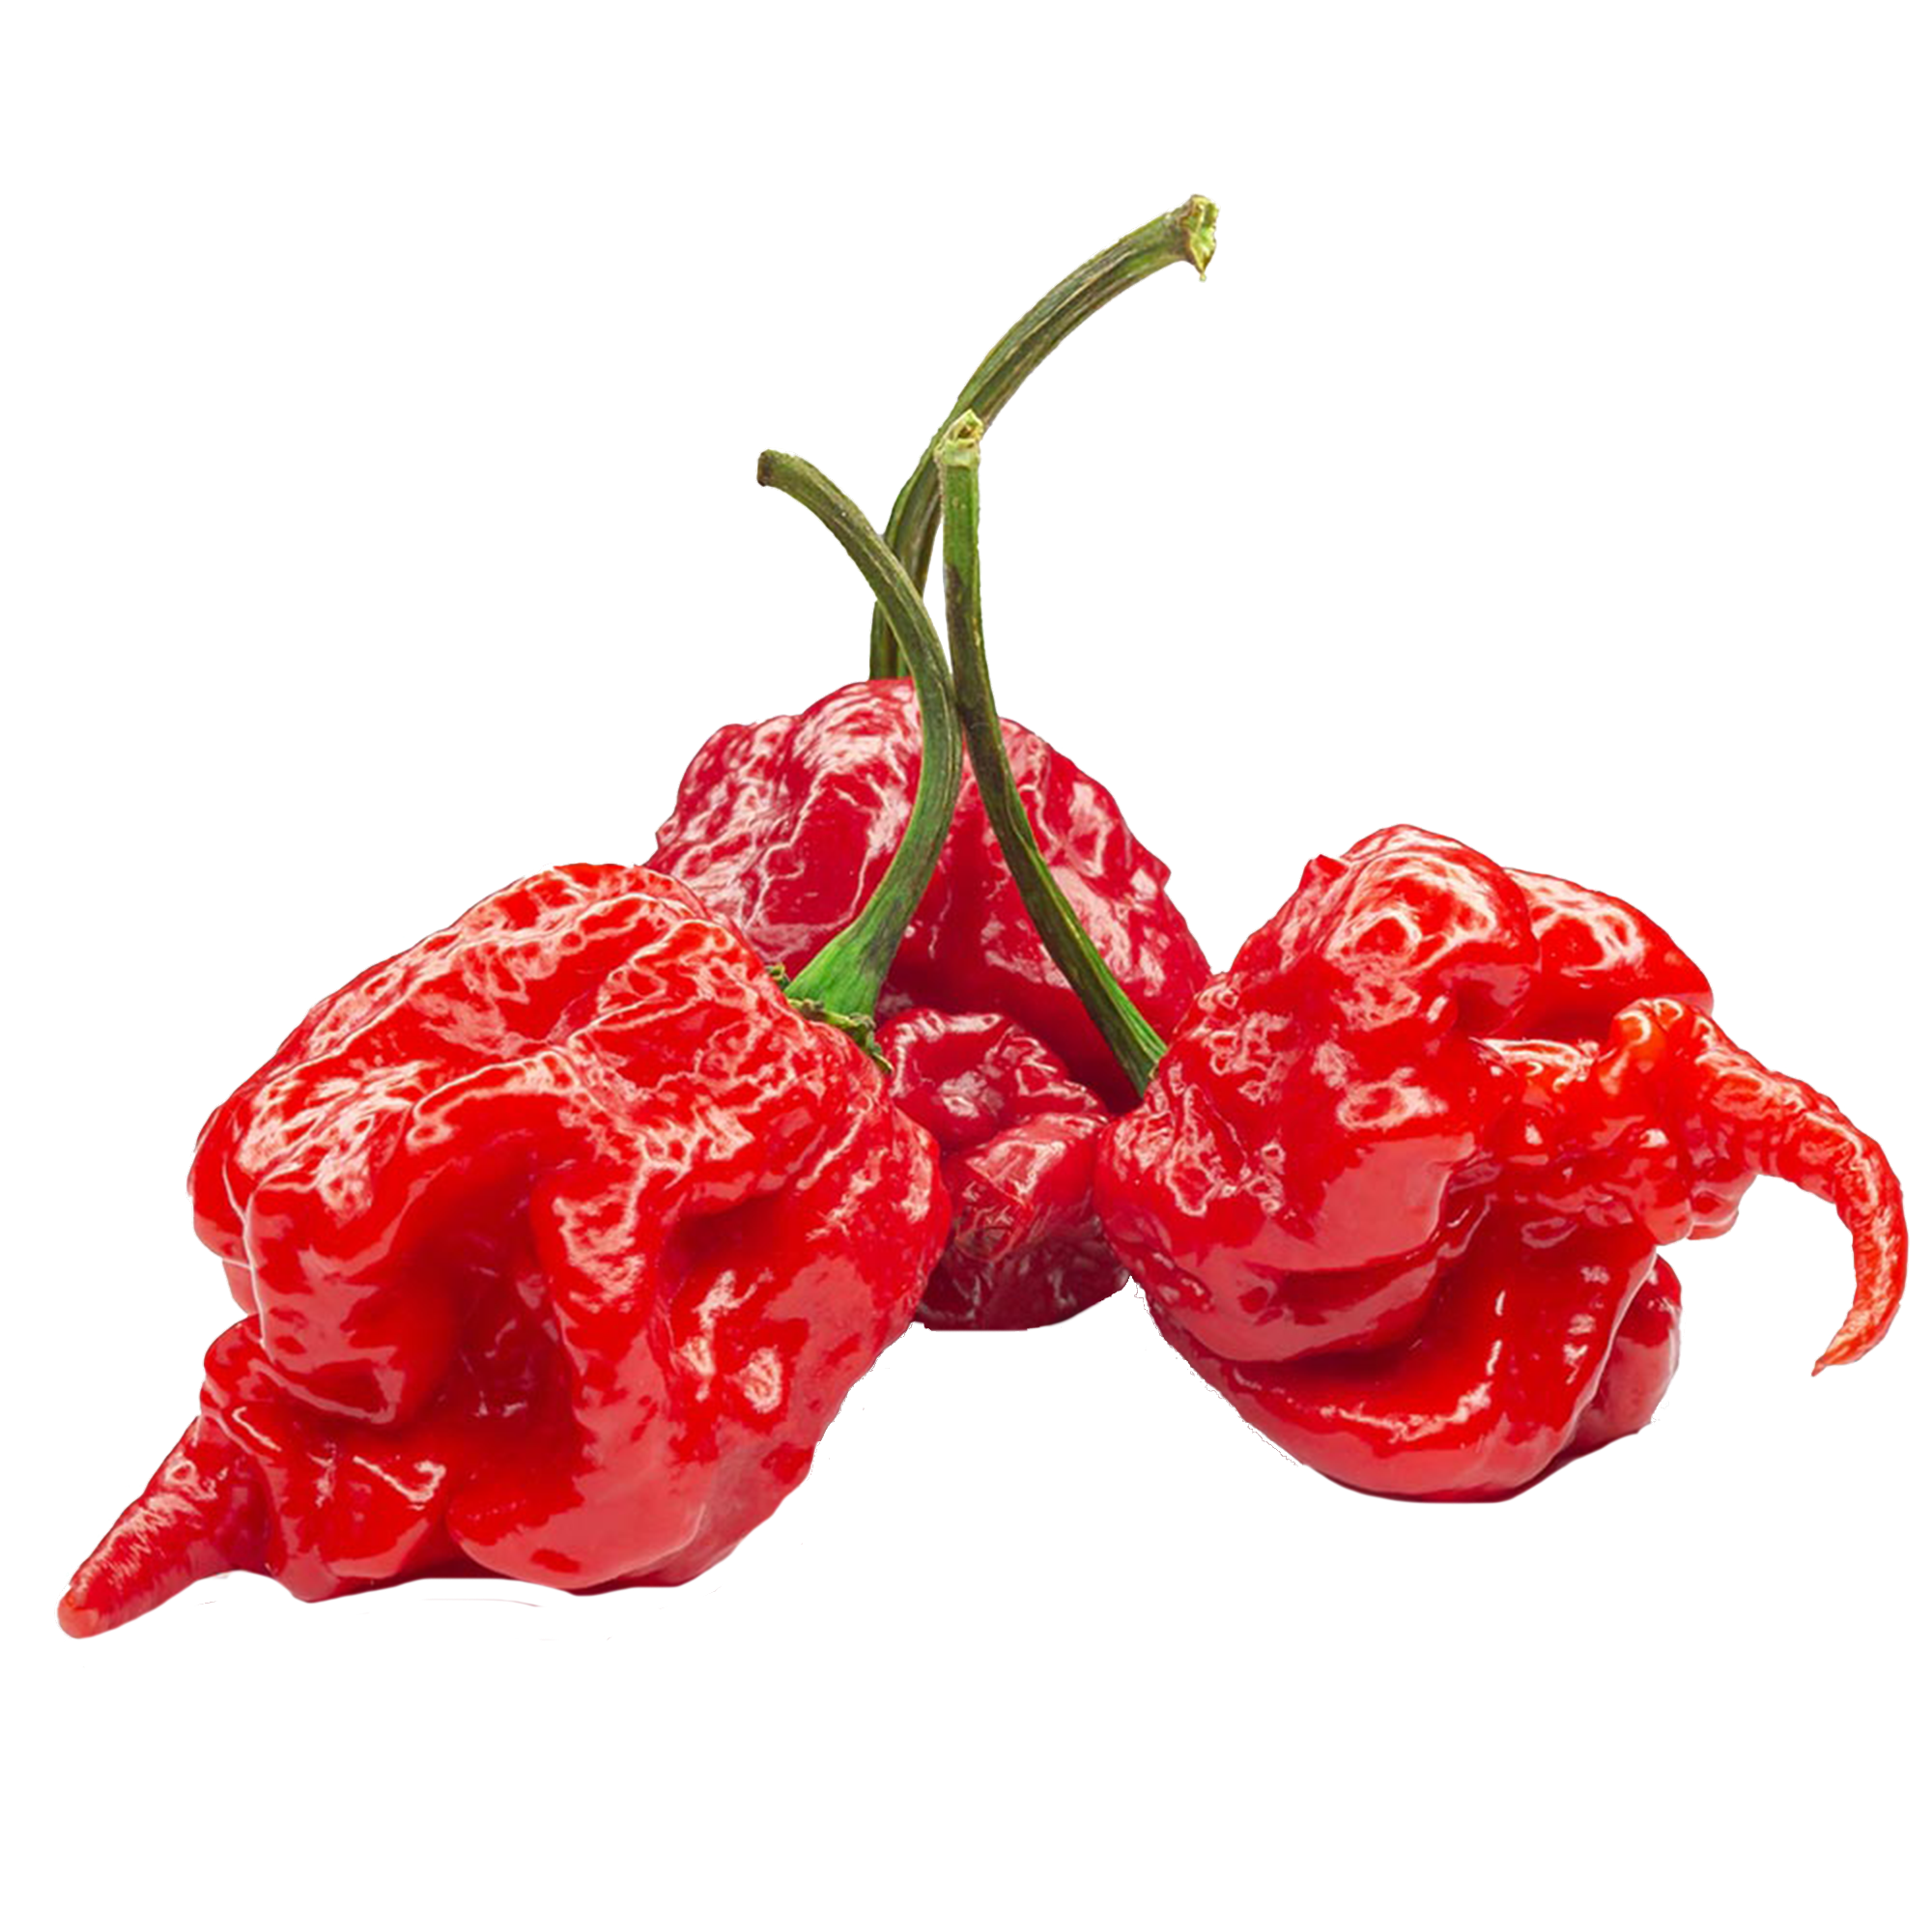 “Carolina Reaper” chili plants